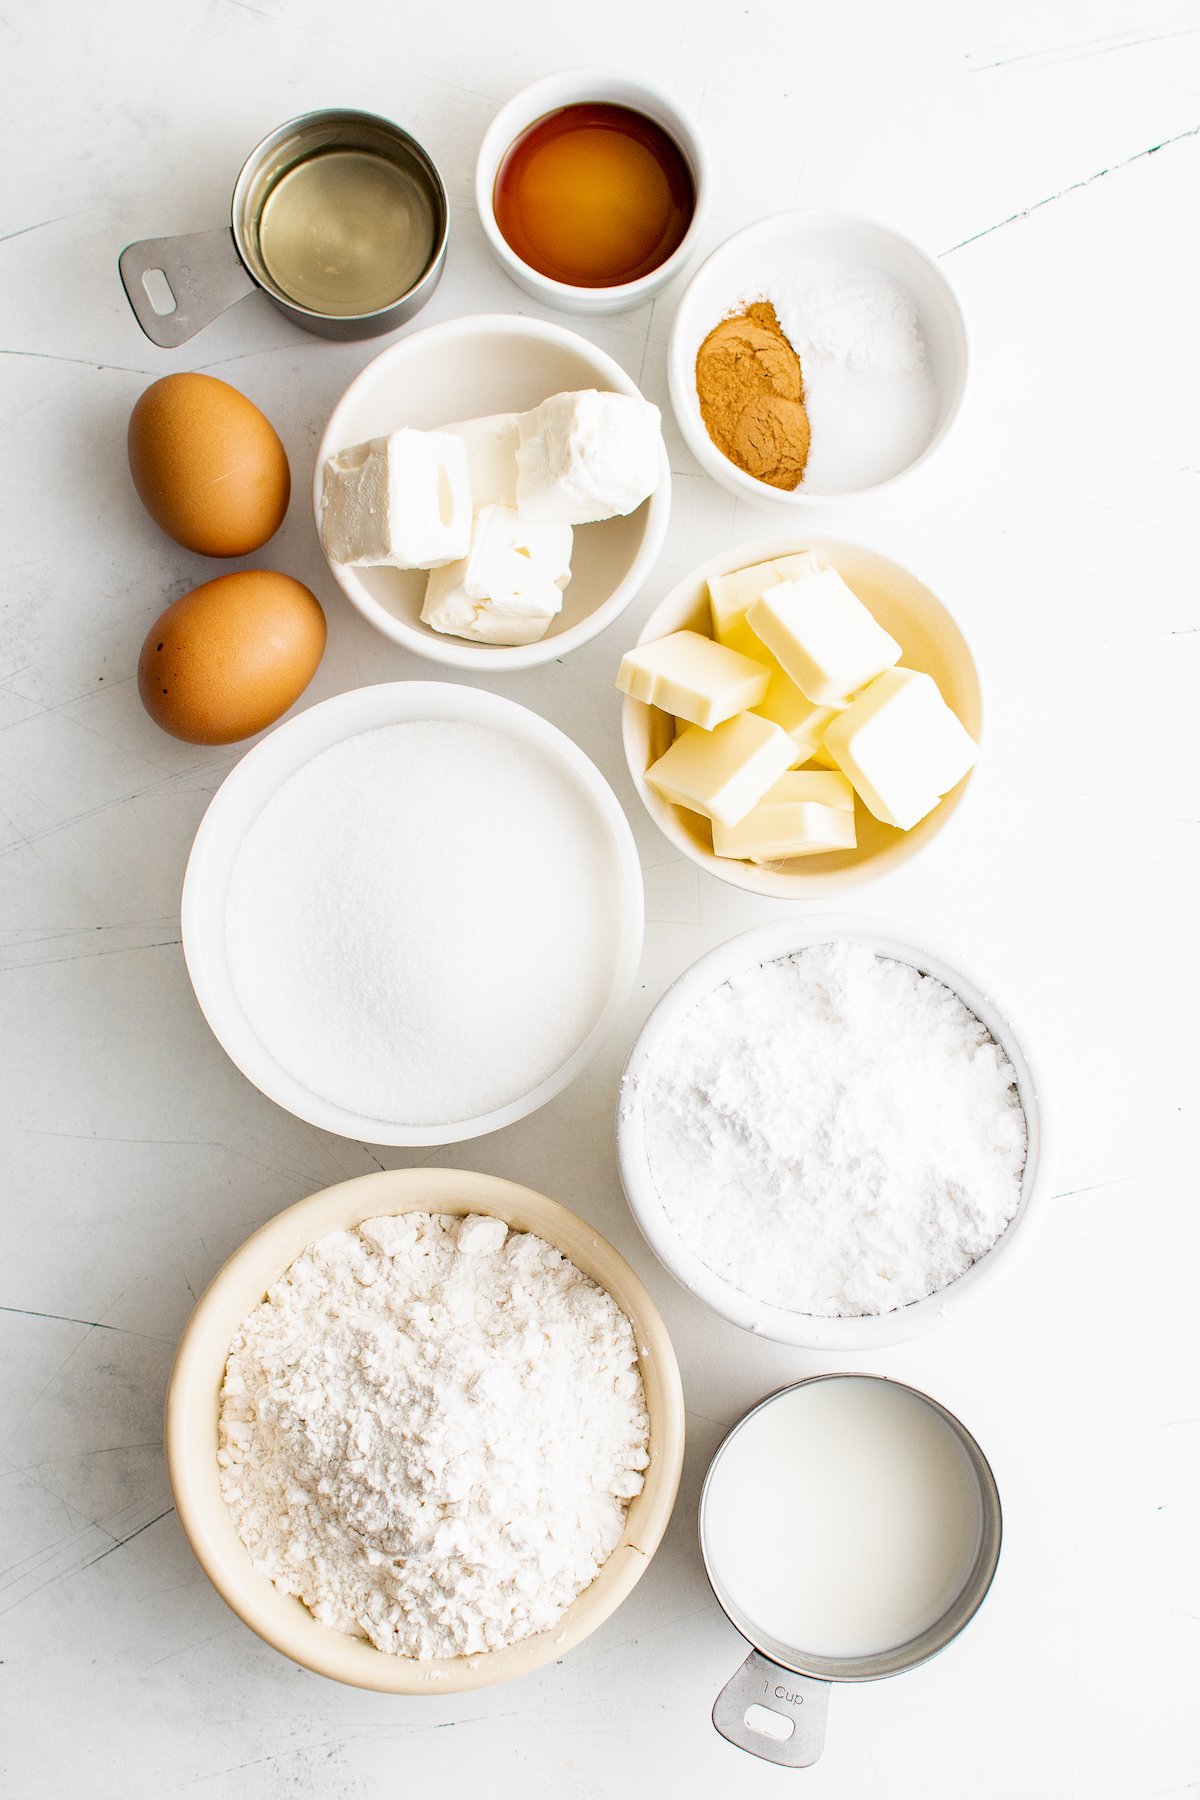 From top: vegetable oil, vanilla, eggs, cream cheese, butter, sugar, flour, confectioner's sugar, milk.